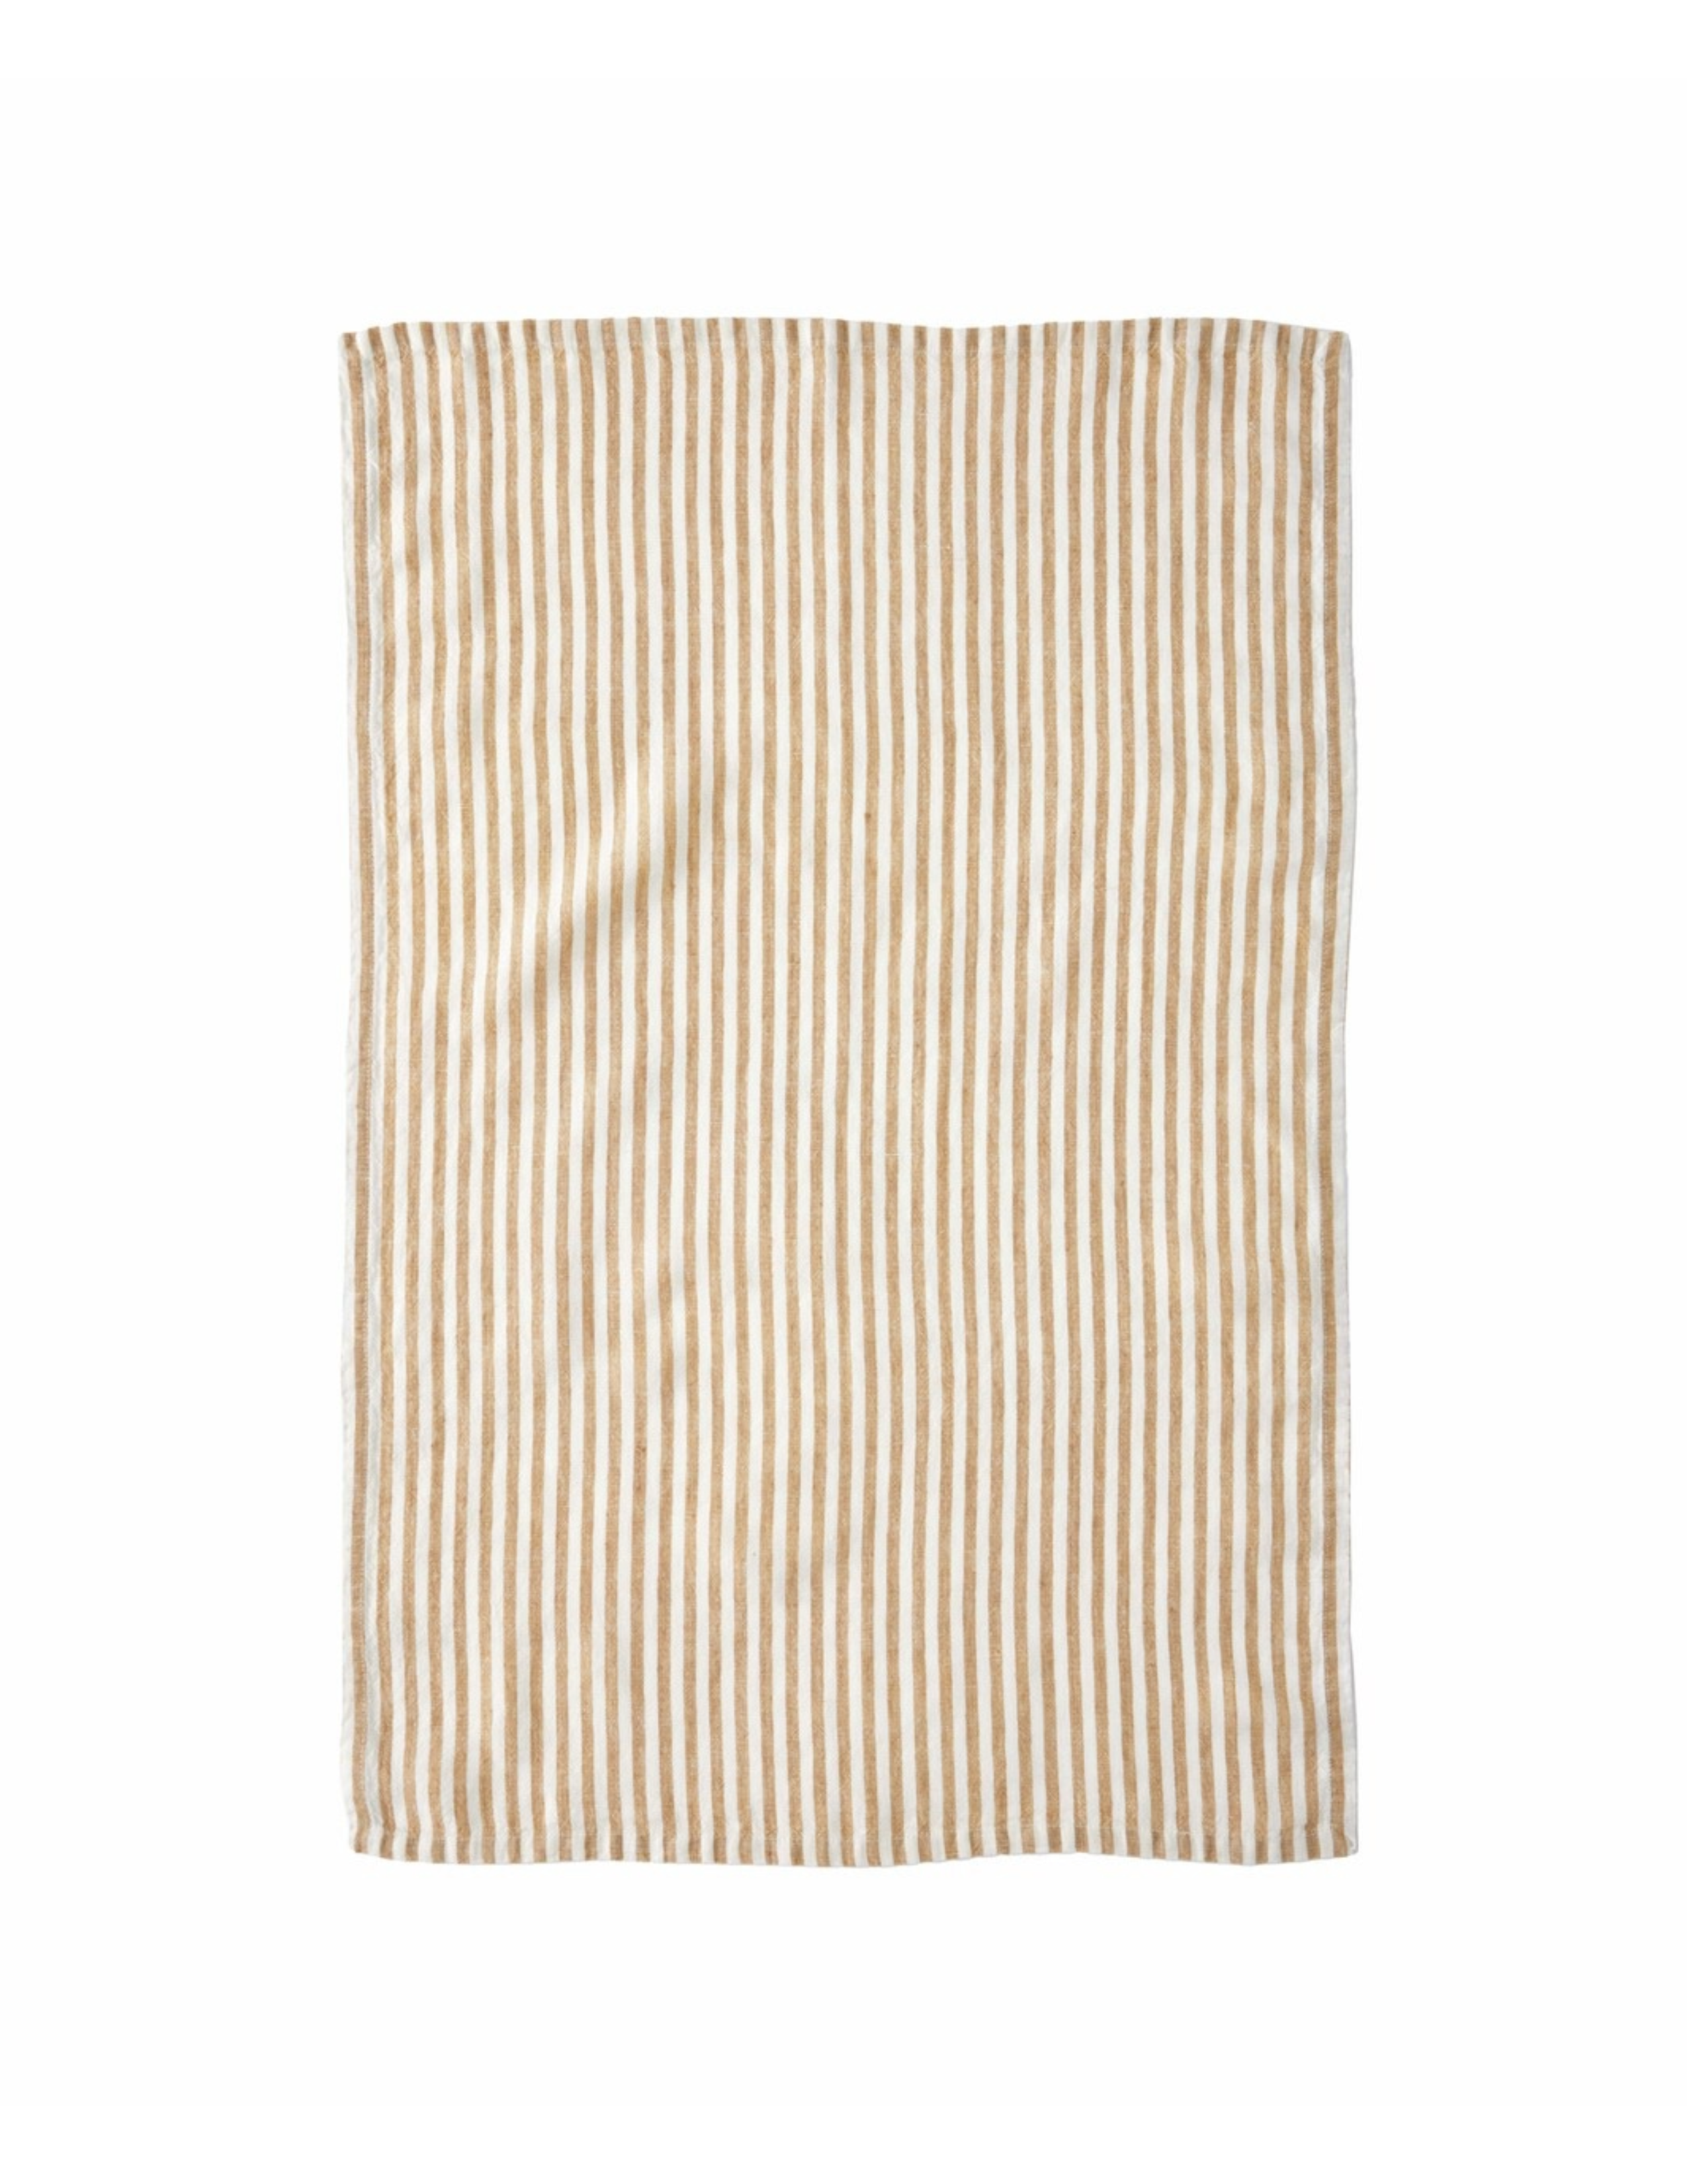 Tangier Striped Linen Tea Towel Set of 2 - Dune